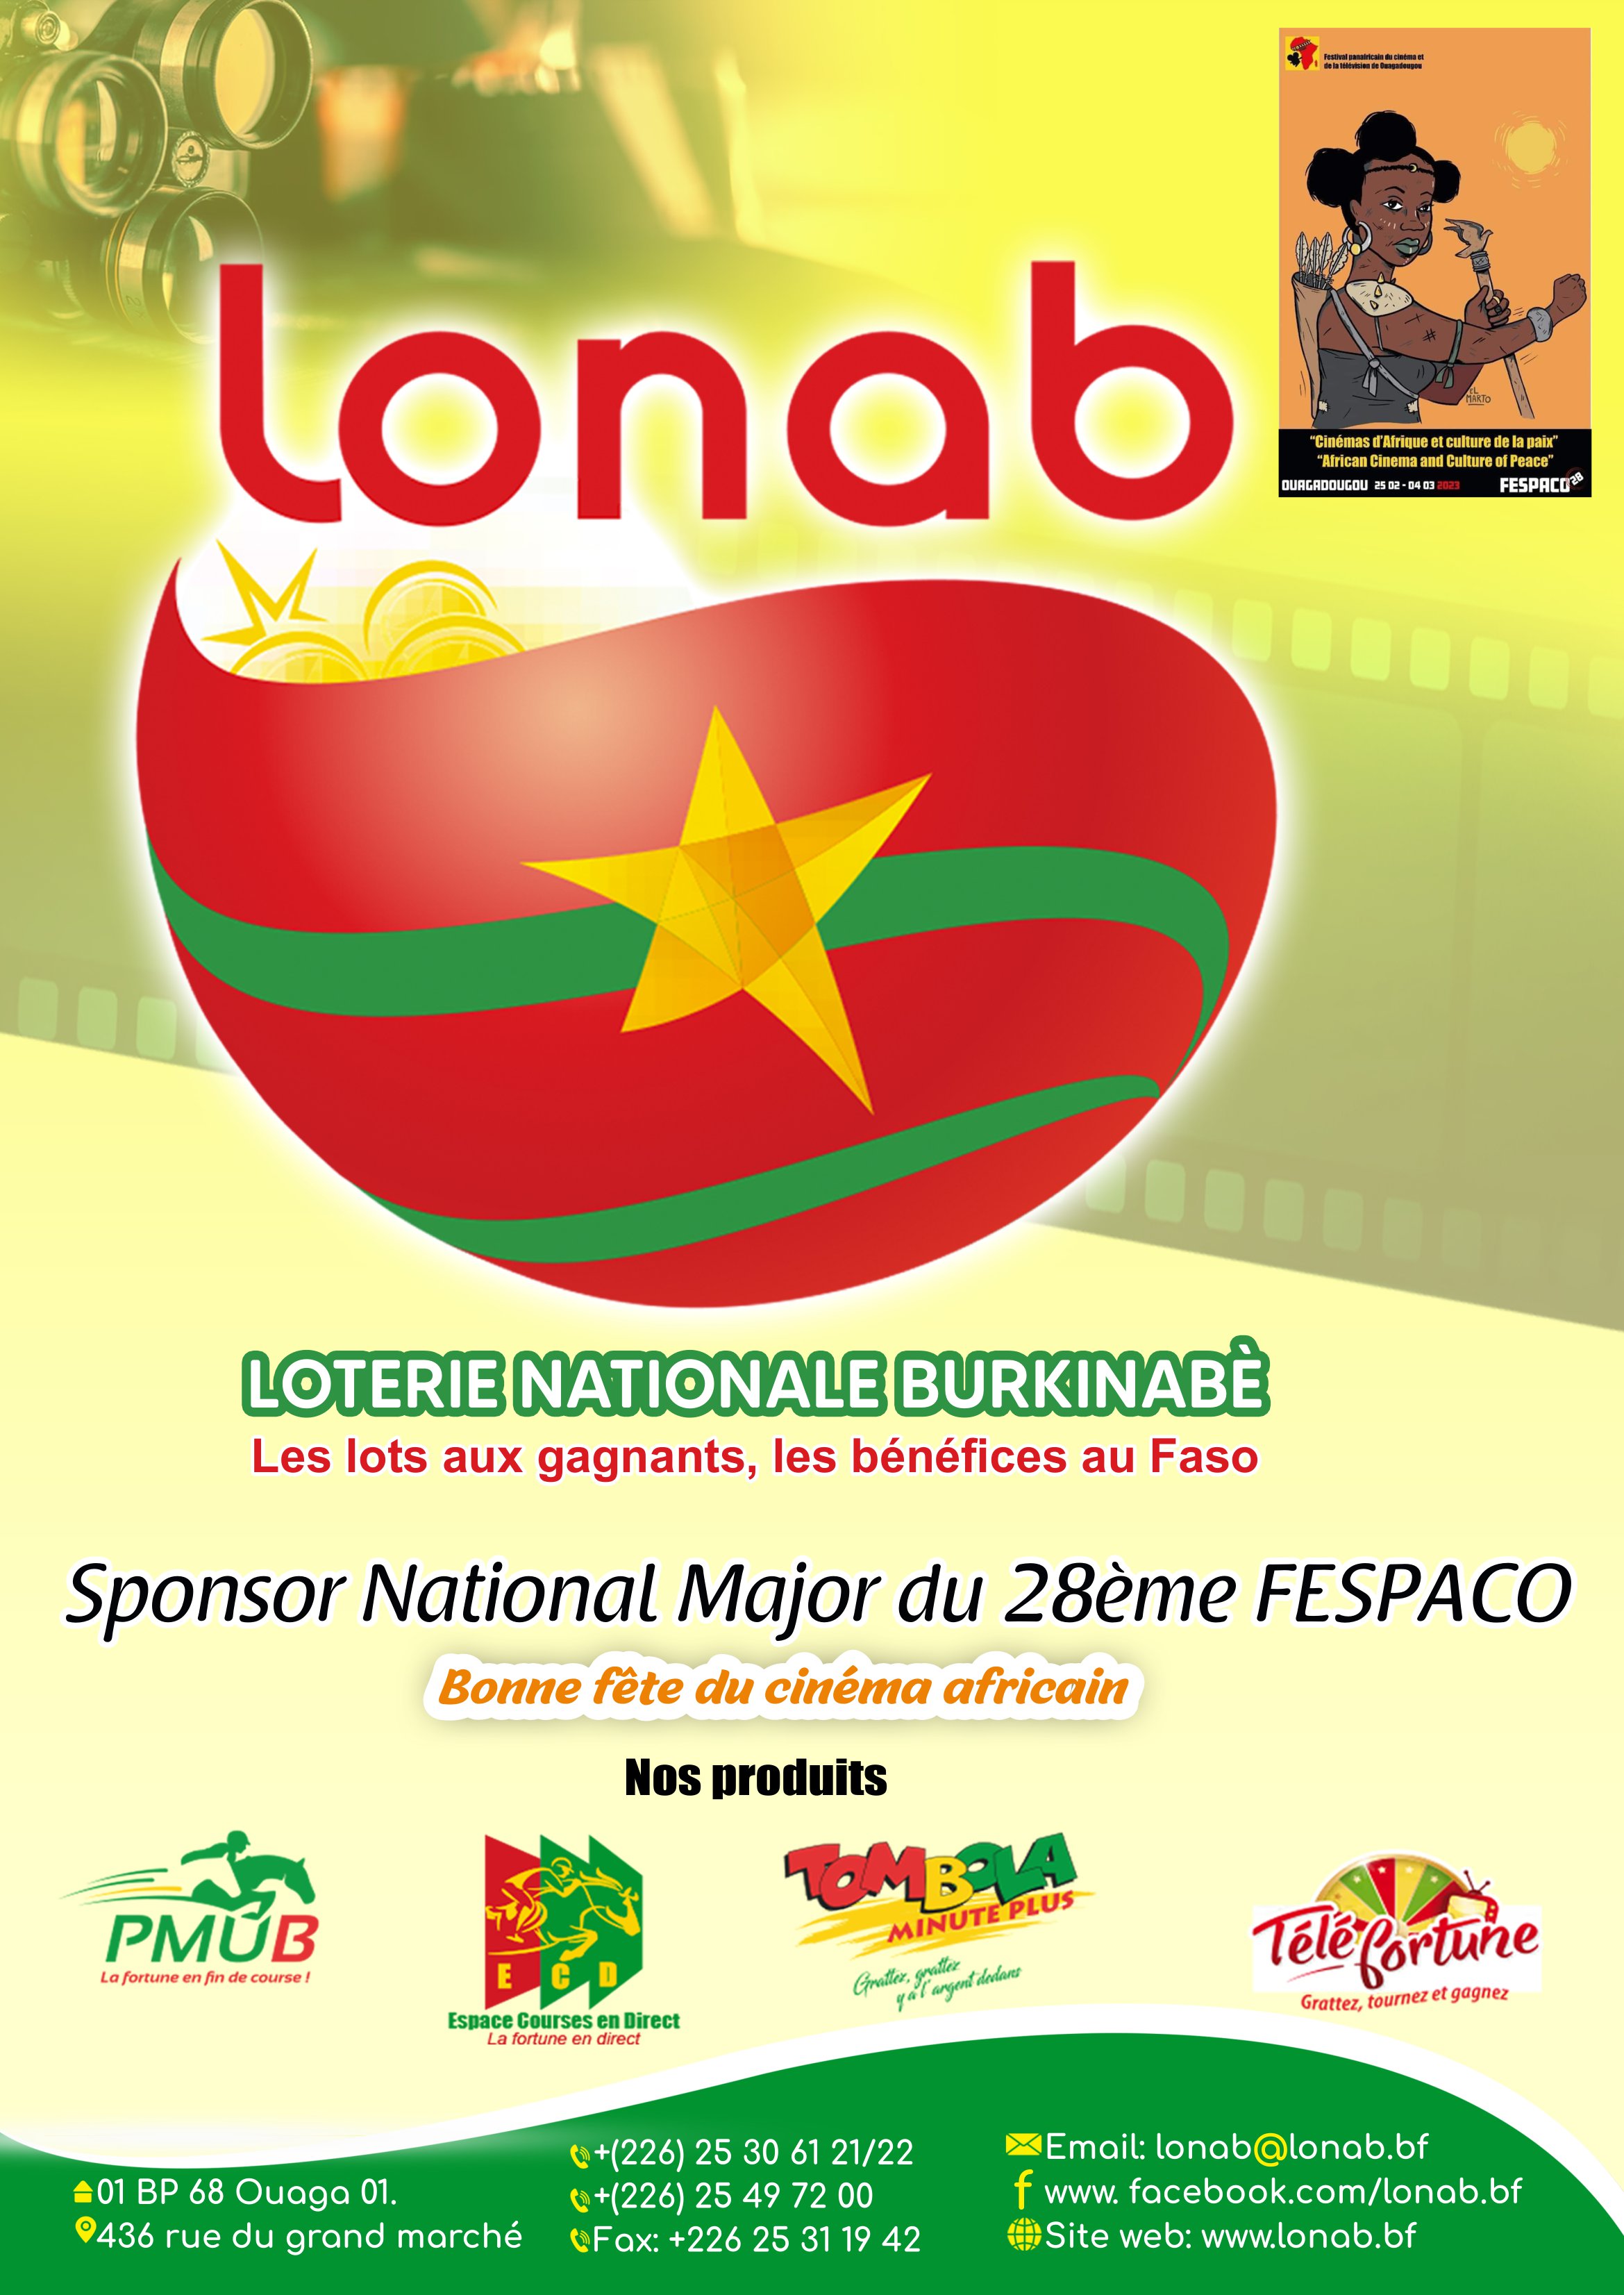 Lonab, sponsor national major du 28e FESPACO